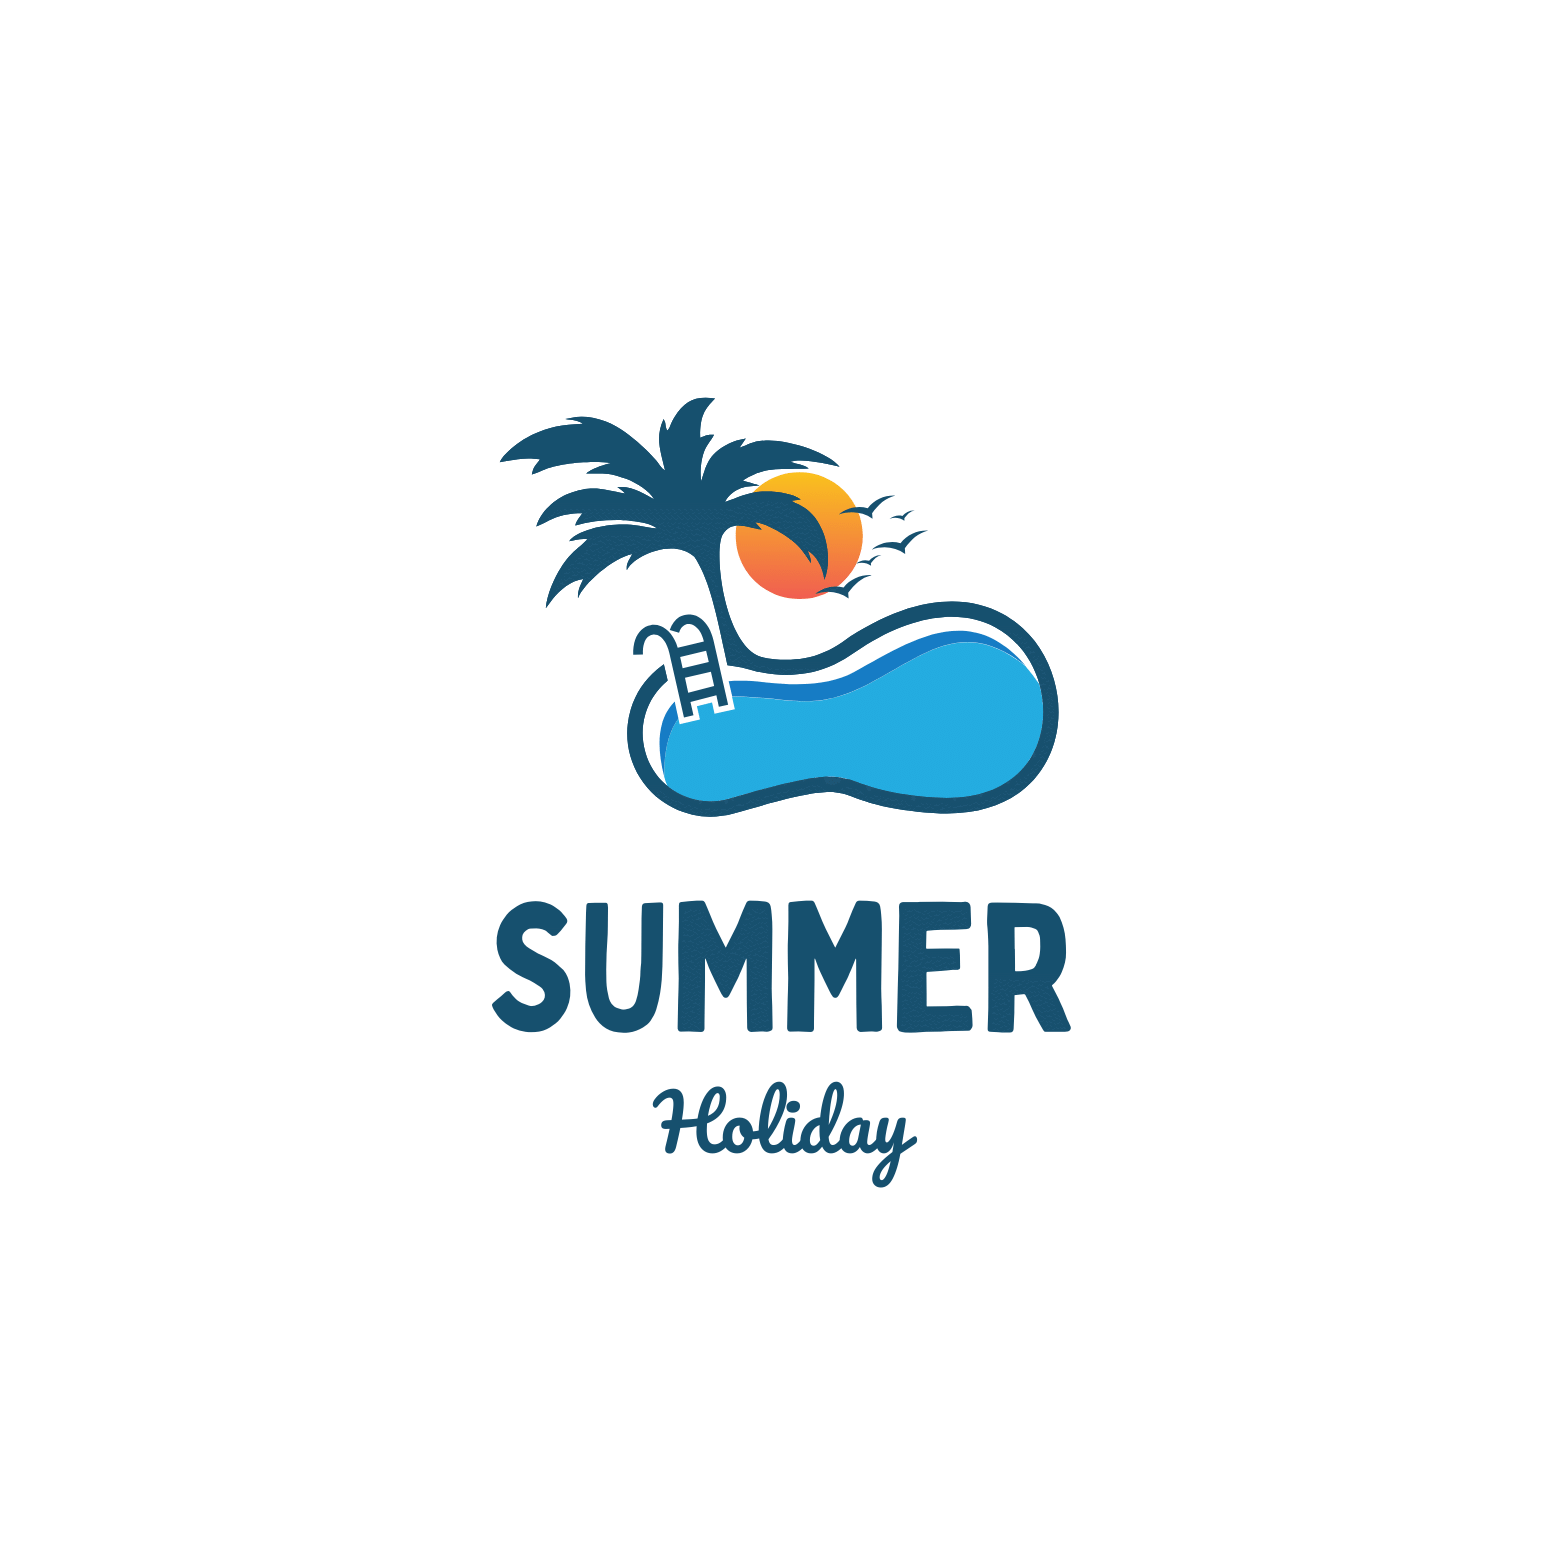 5 Summer Camp Logos Bundle preview image.